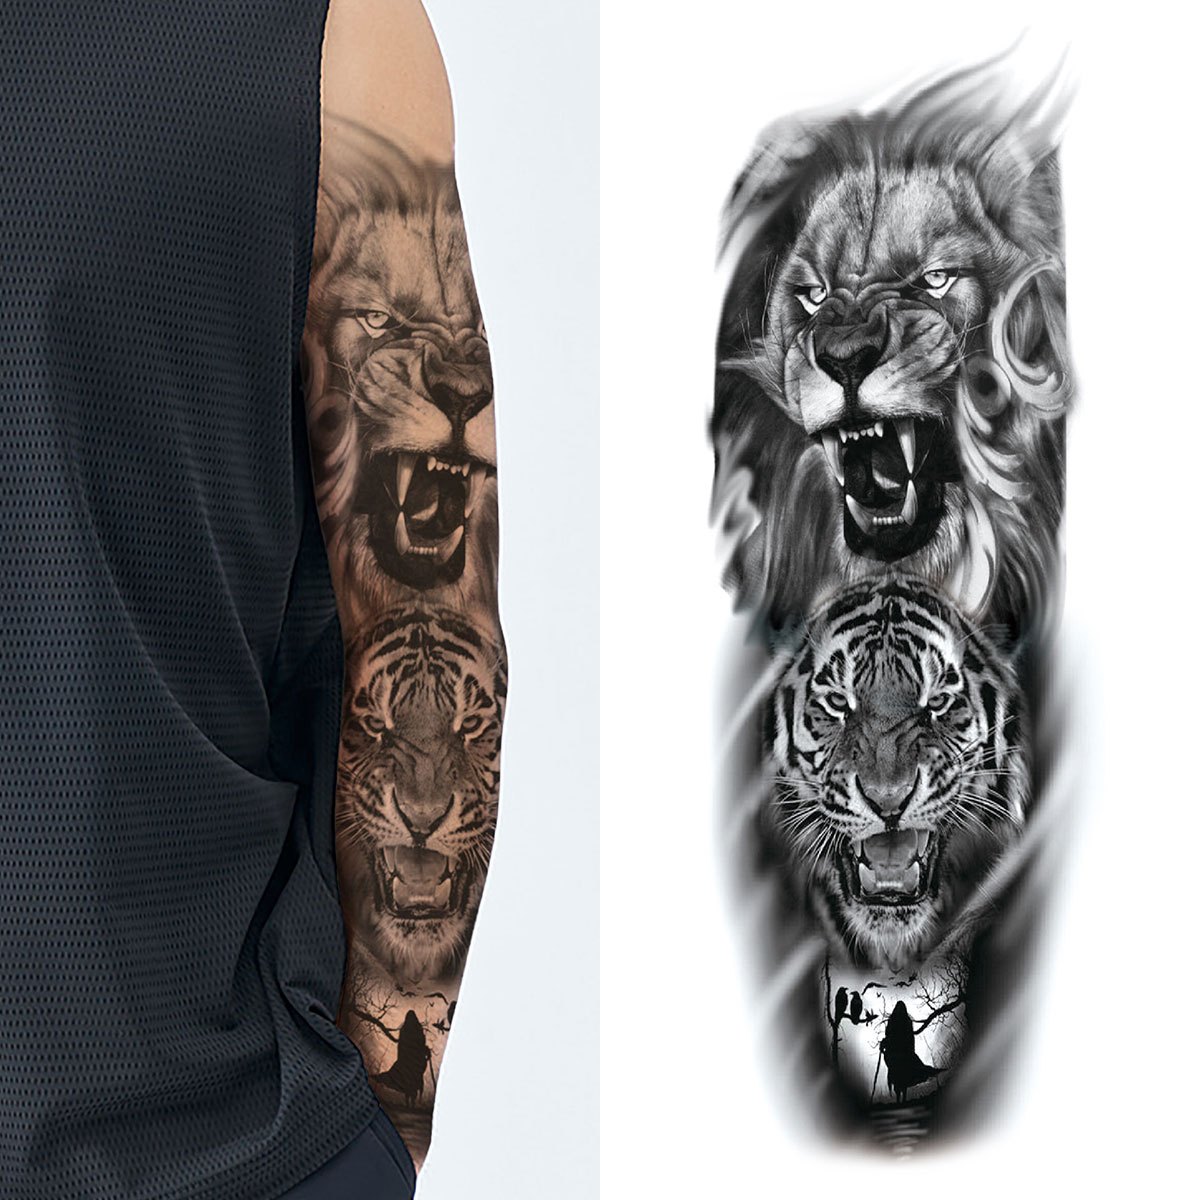 Top 101 Tiger Tattoo Ideas - [2021 Inspiration Guide] | Tiger tattoo, Tiger  forearm tattoo, Forearm tattoo design